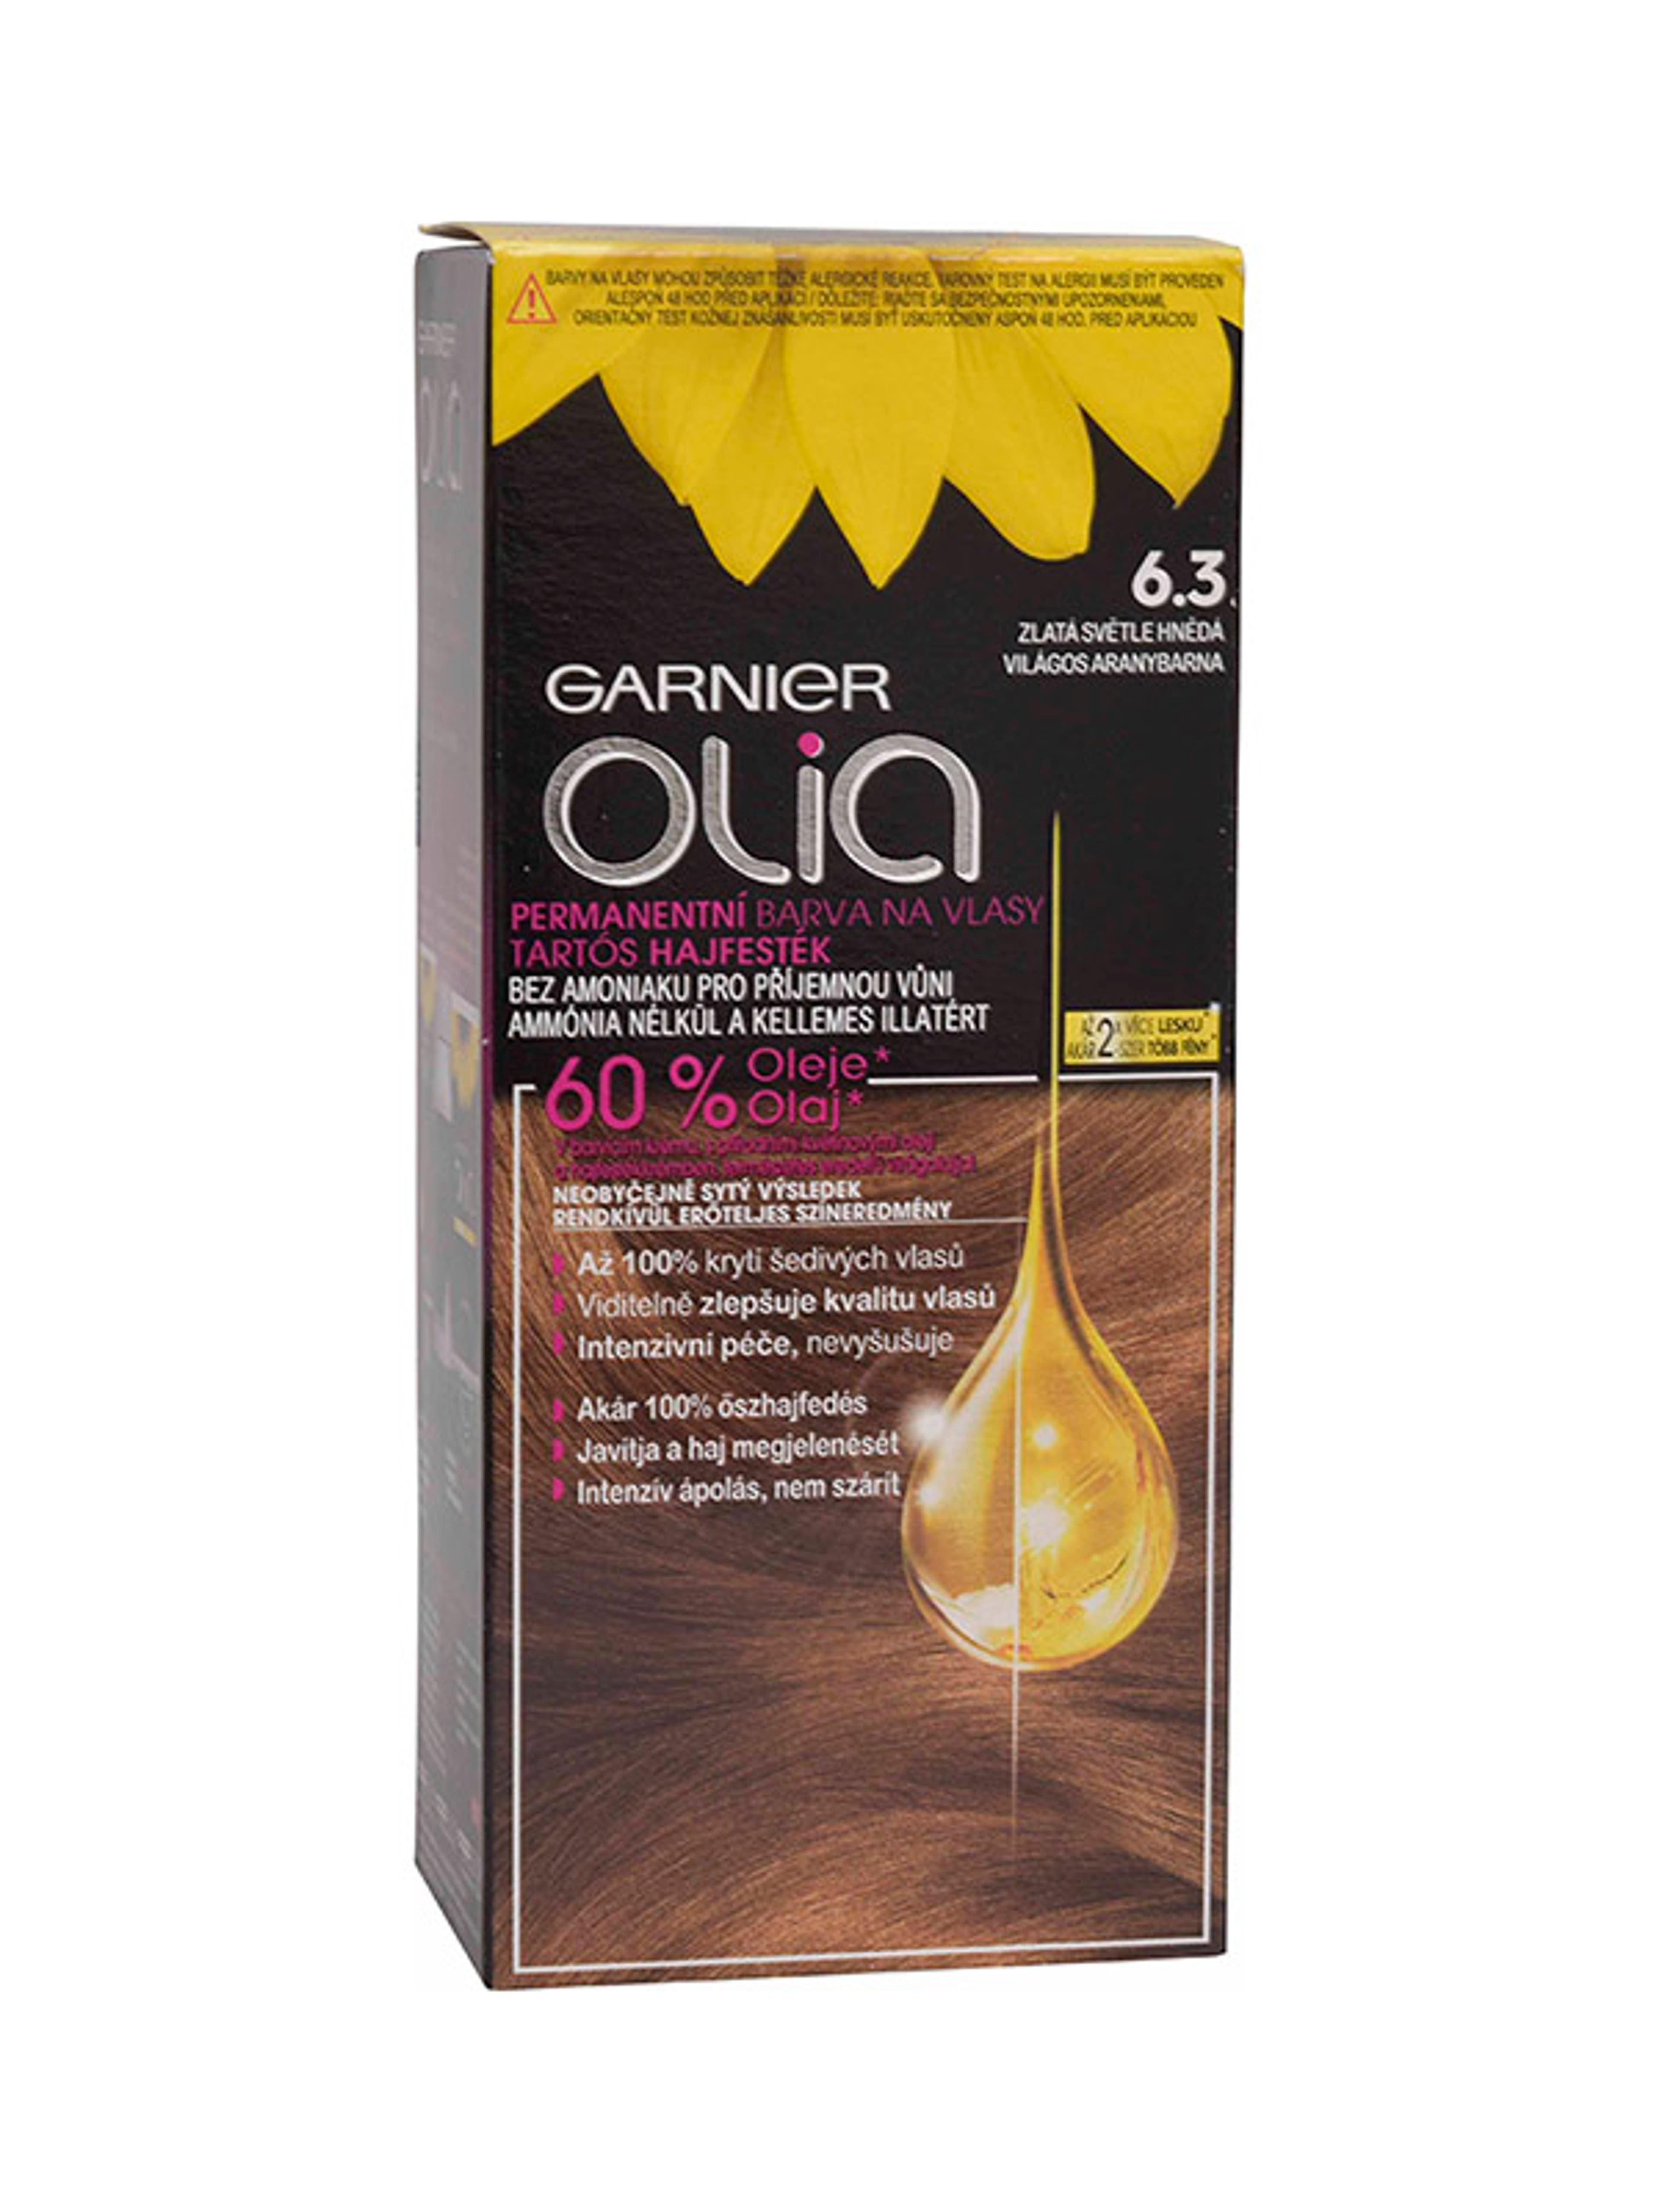 Garnier Olia tartós hajfesték 6.3 Világos aranybarna - 1 db-2